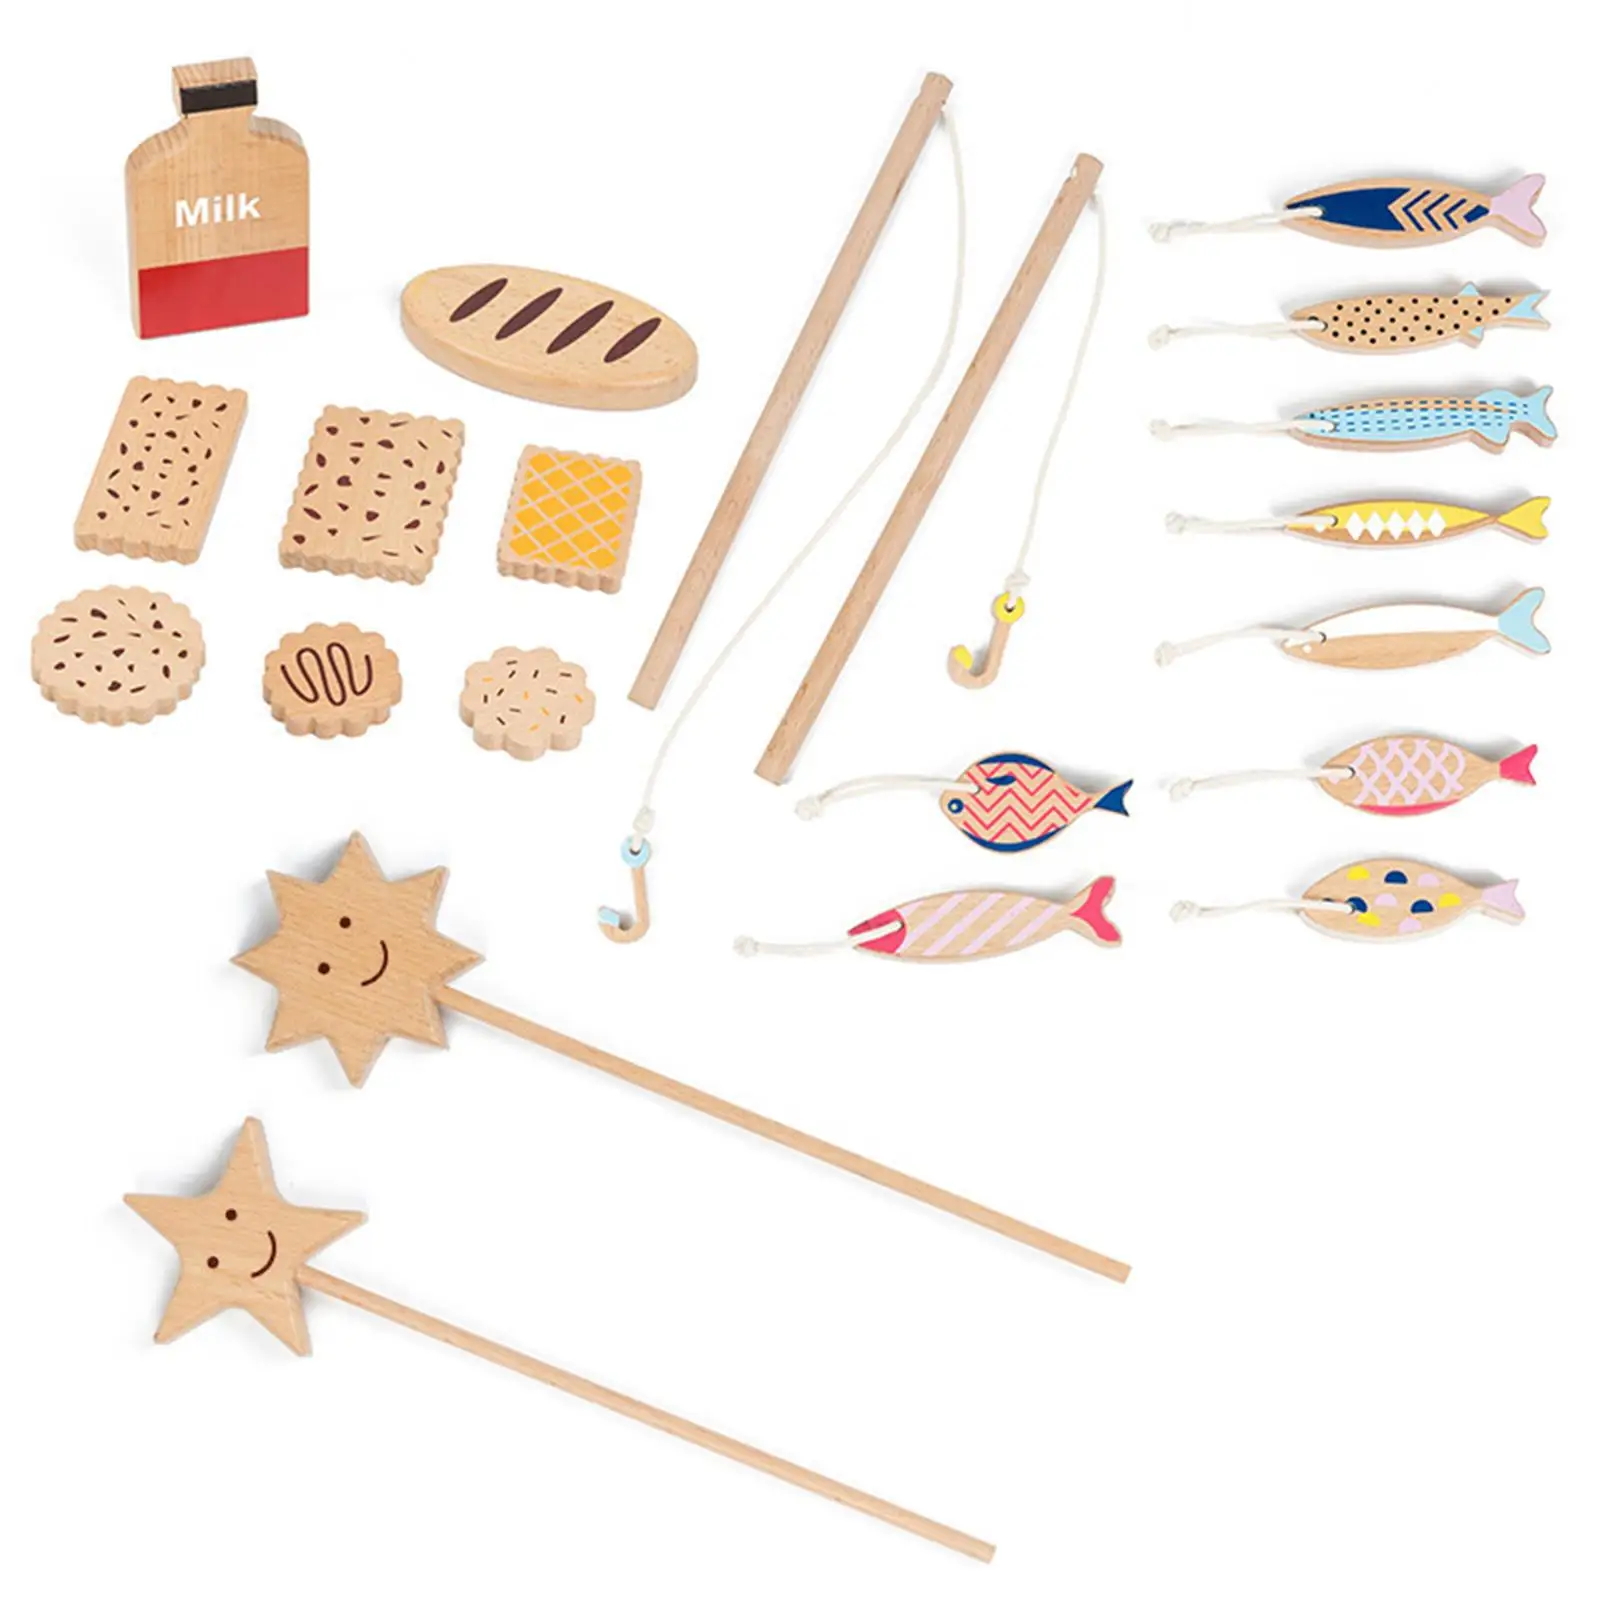 Pretend Wooden Handicraft Toy Activities for Children Boys Girls Favors